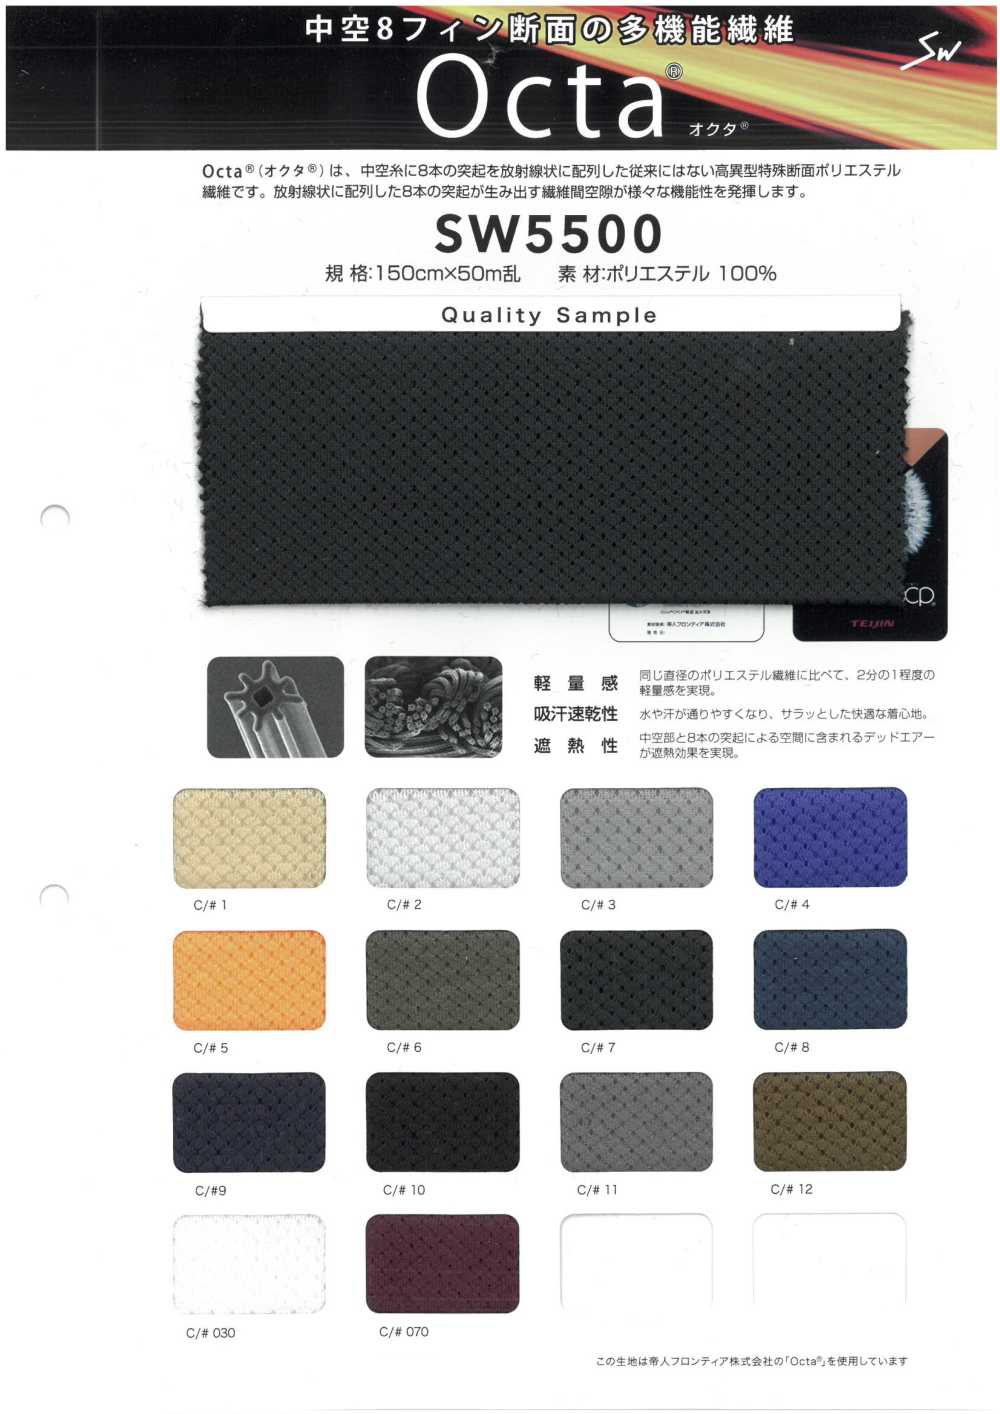 SW5500 Octa®[Textile / Fabric] Sanwa Fibers